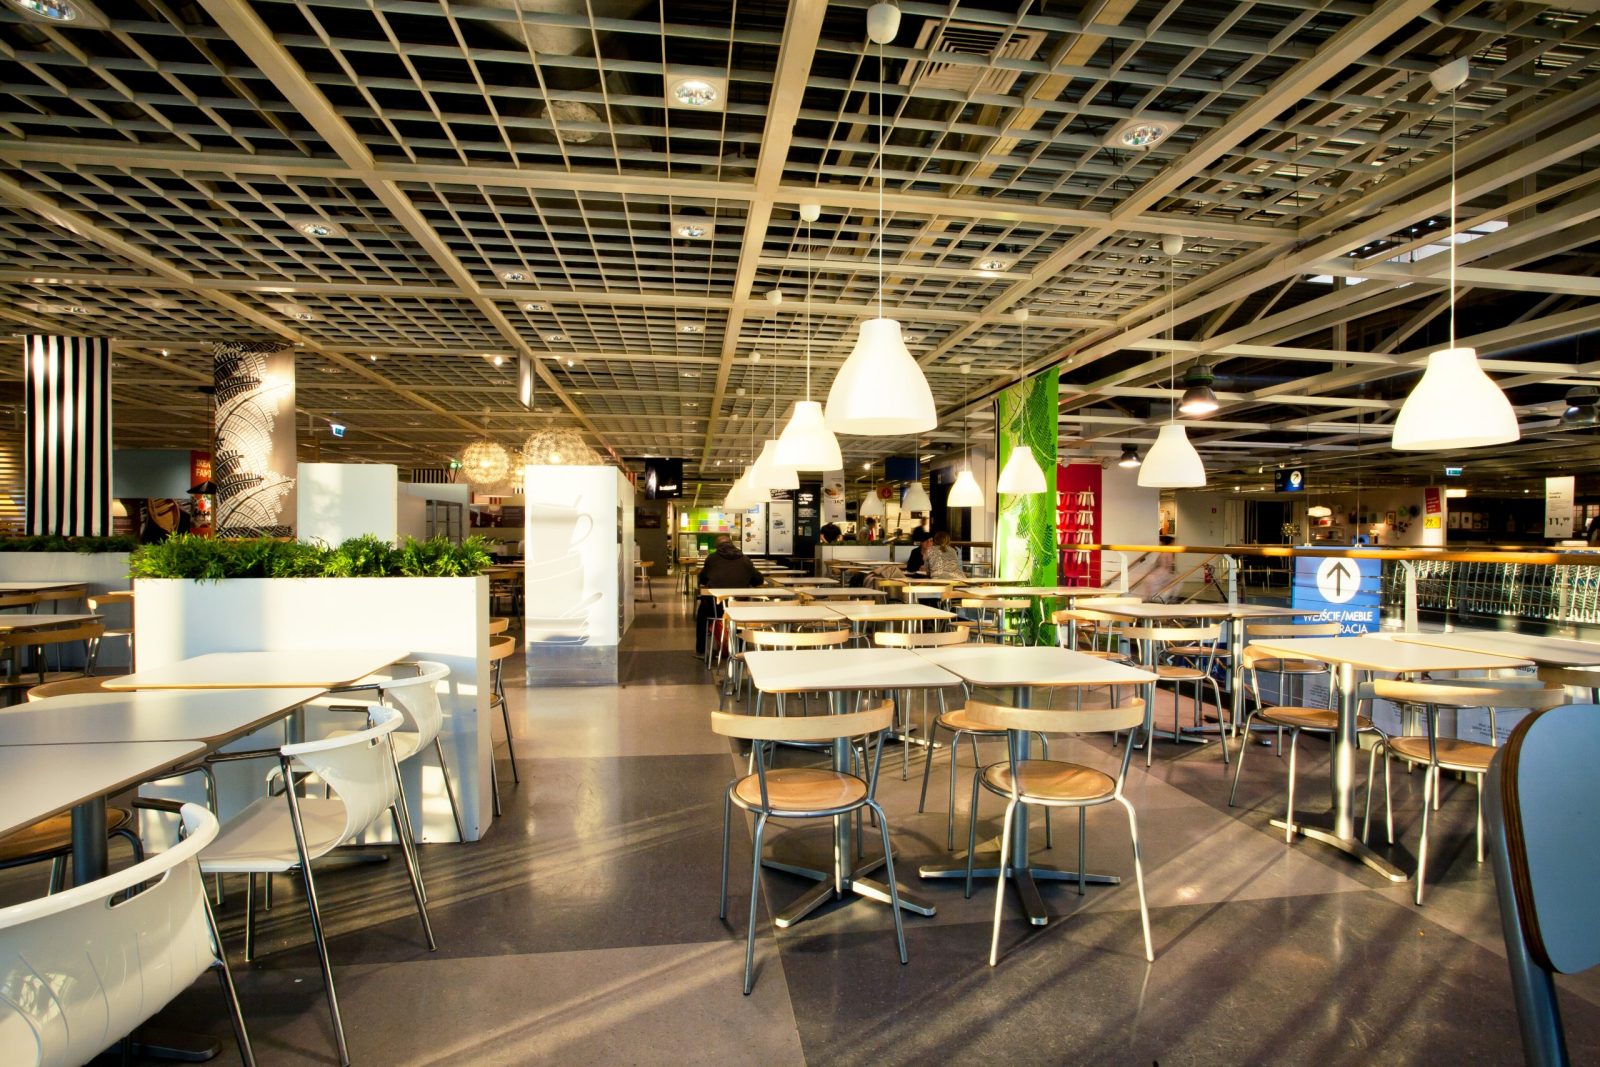 IKEA food court